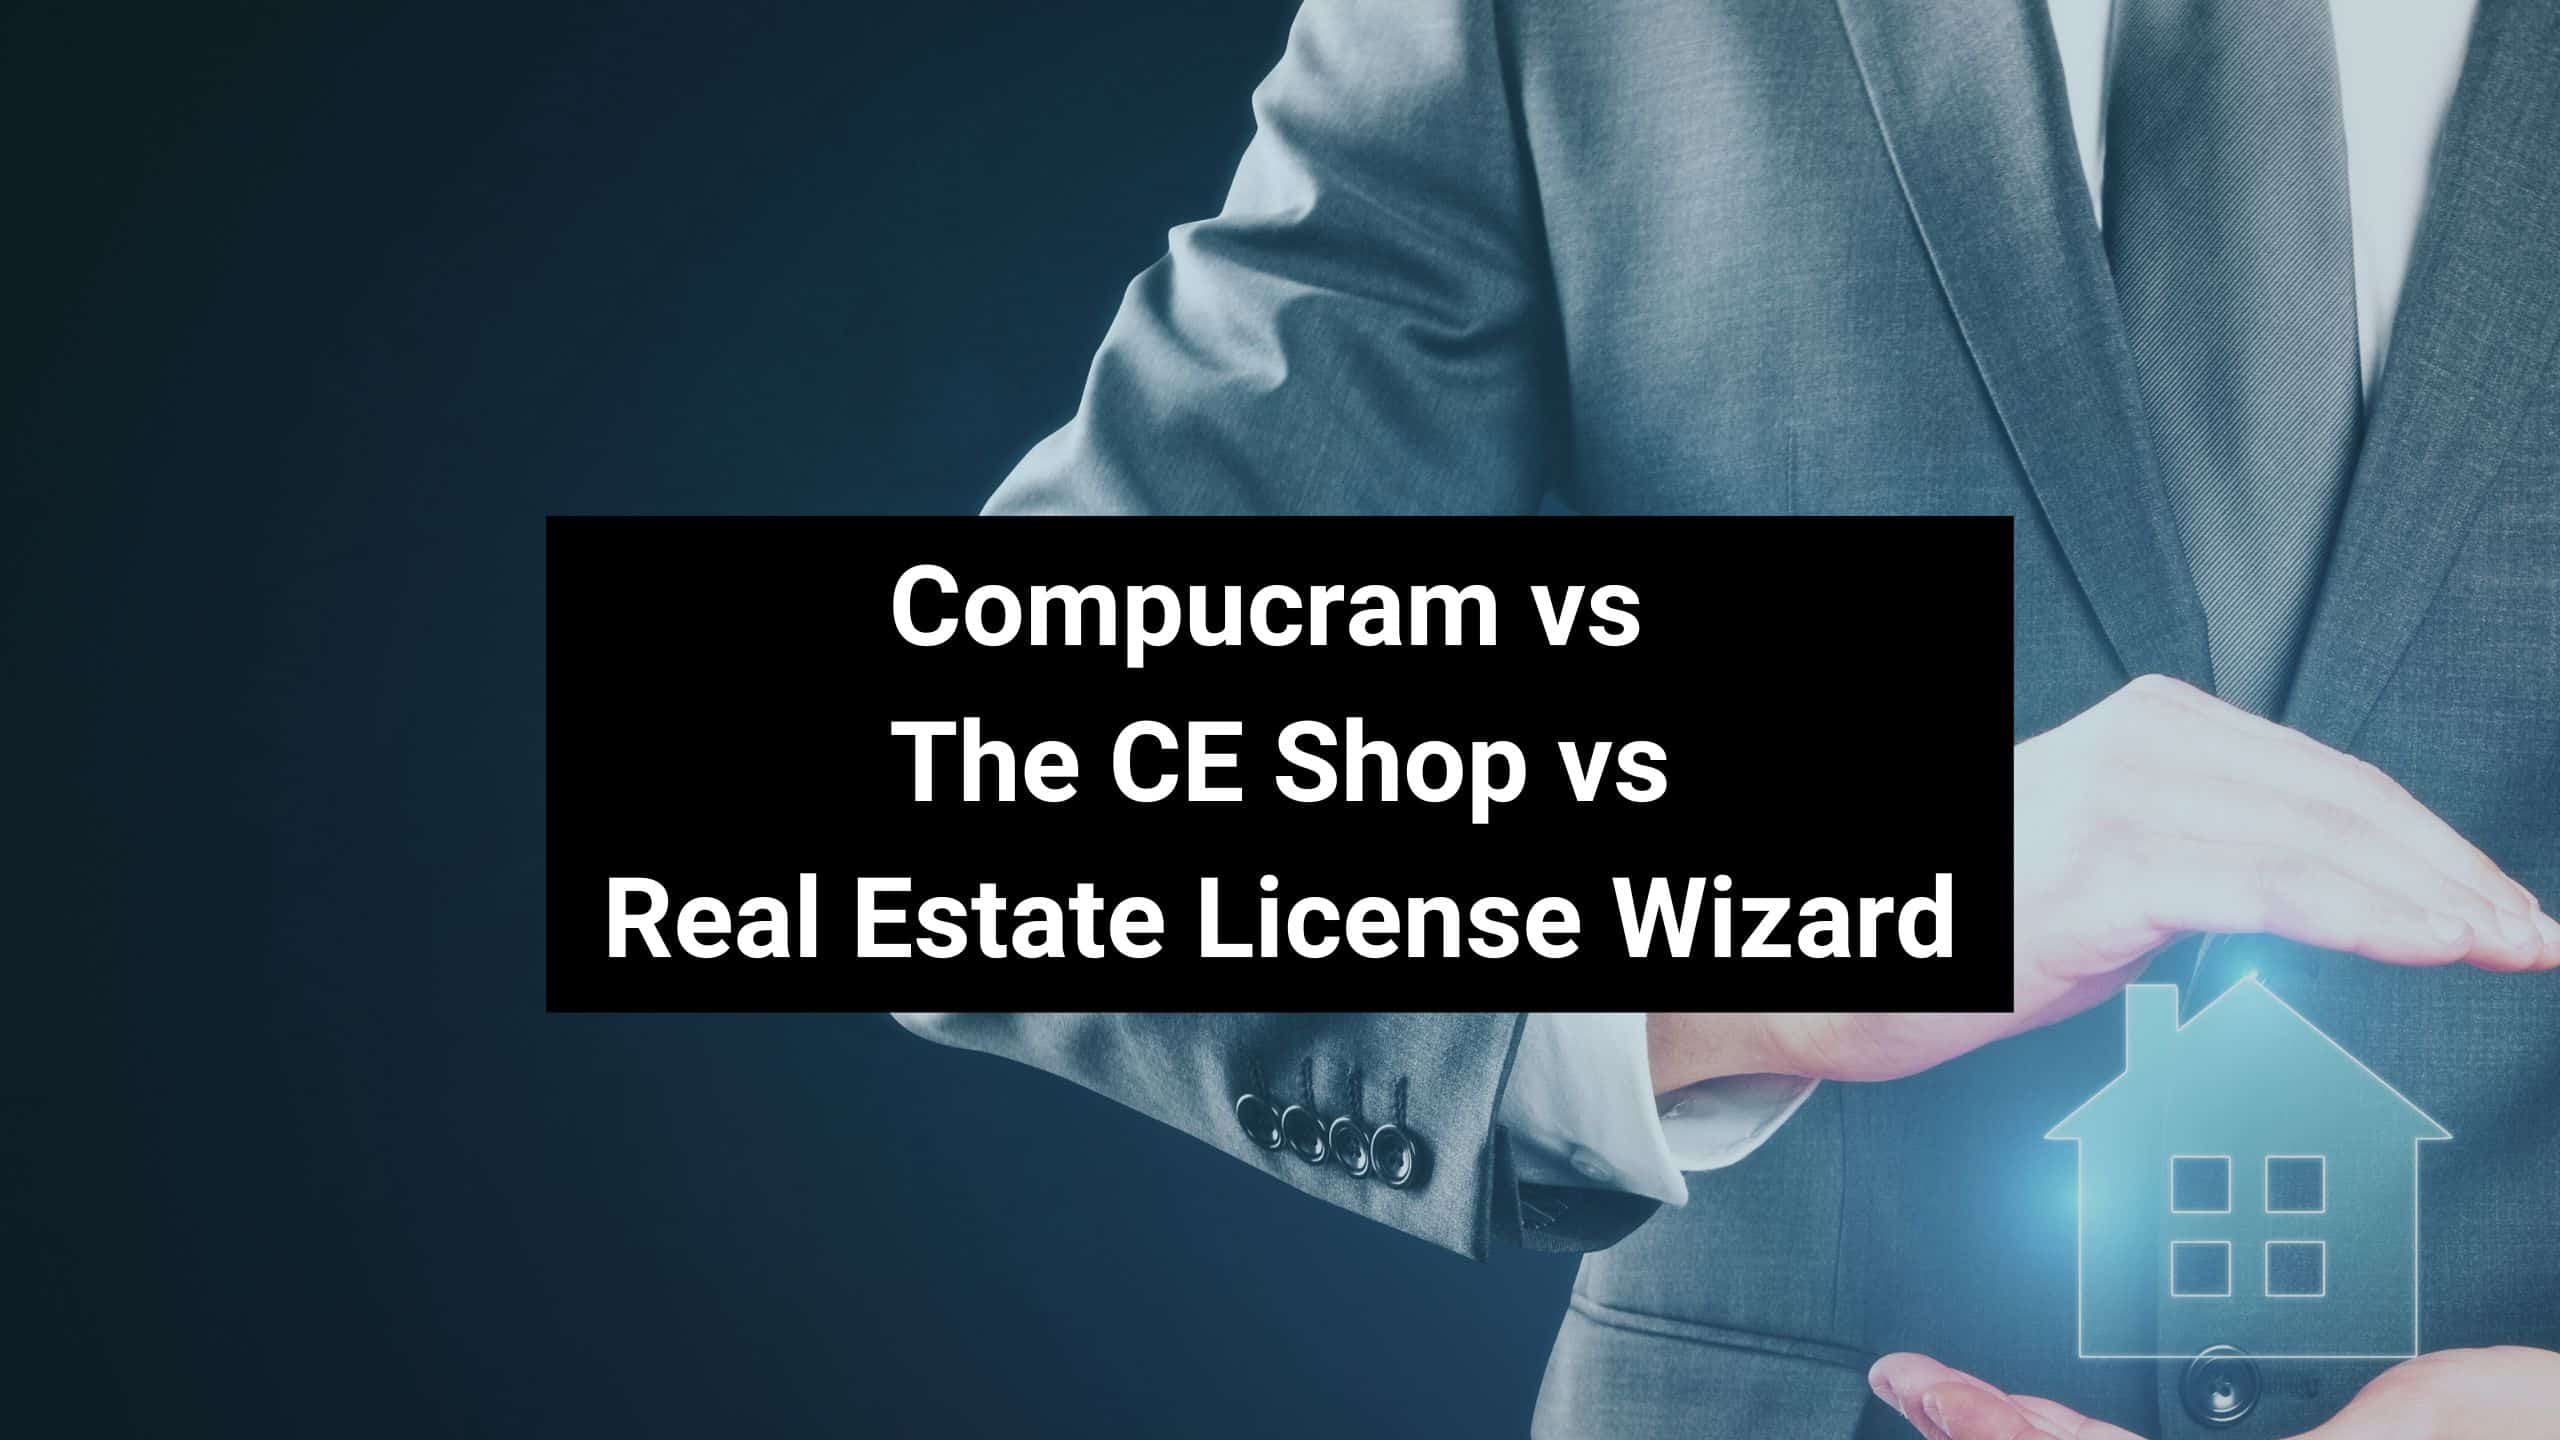 Compucram vs the CE Shop vs Real Estate License Wizard Image